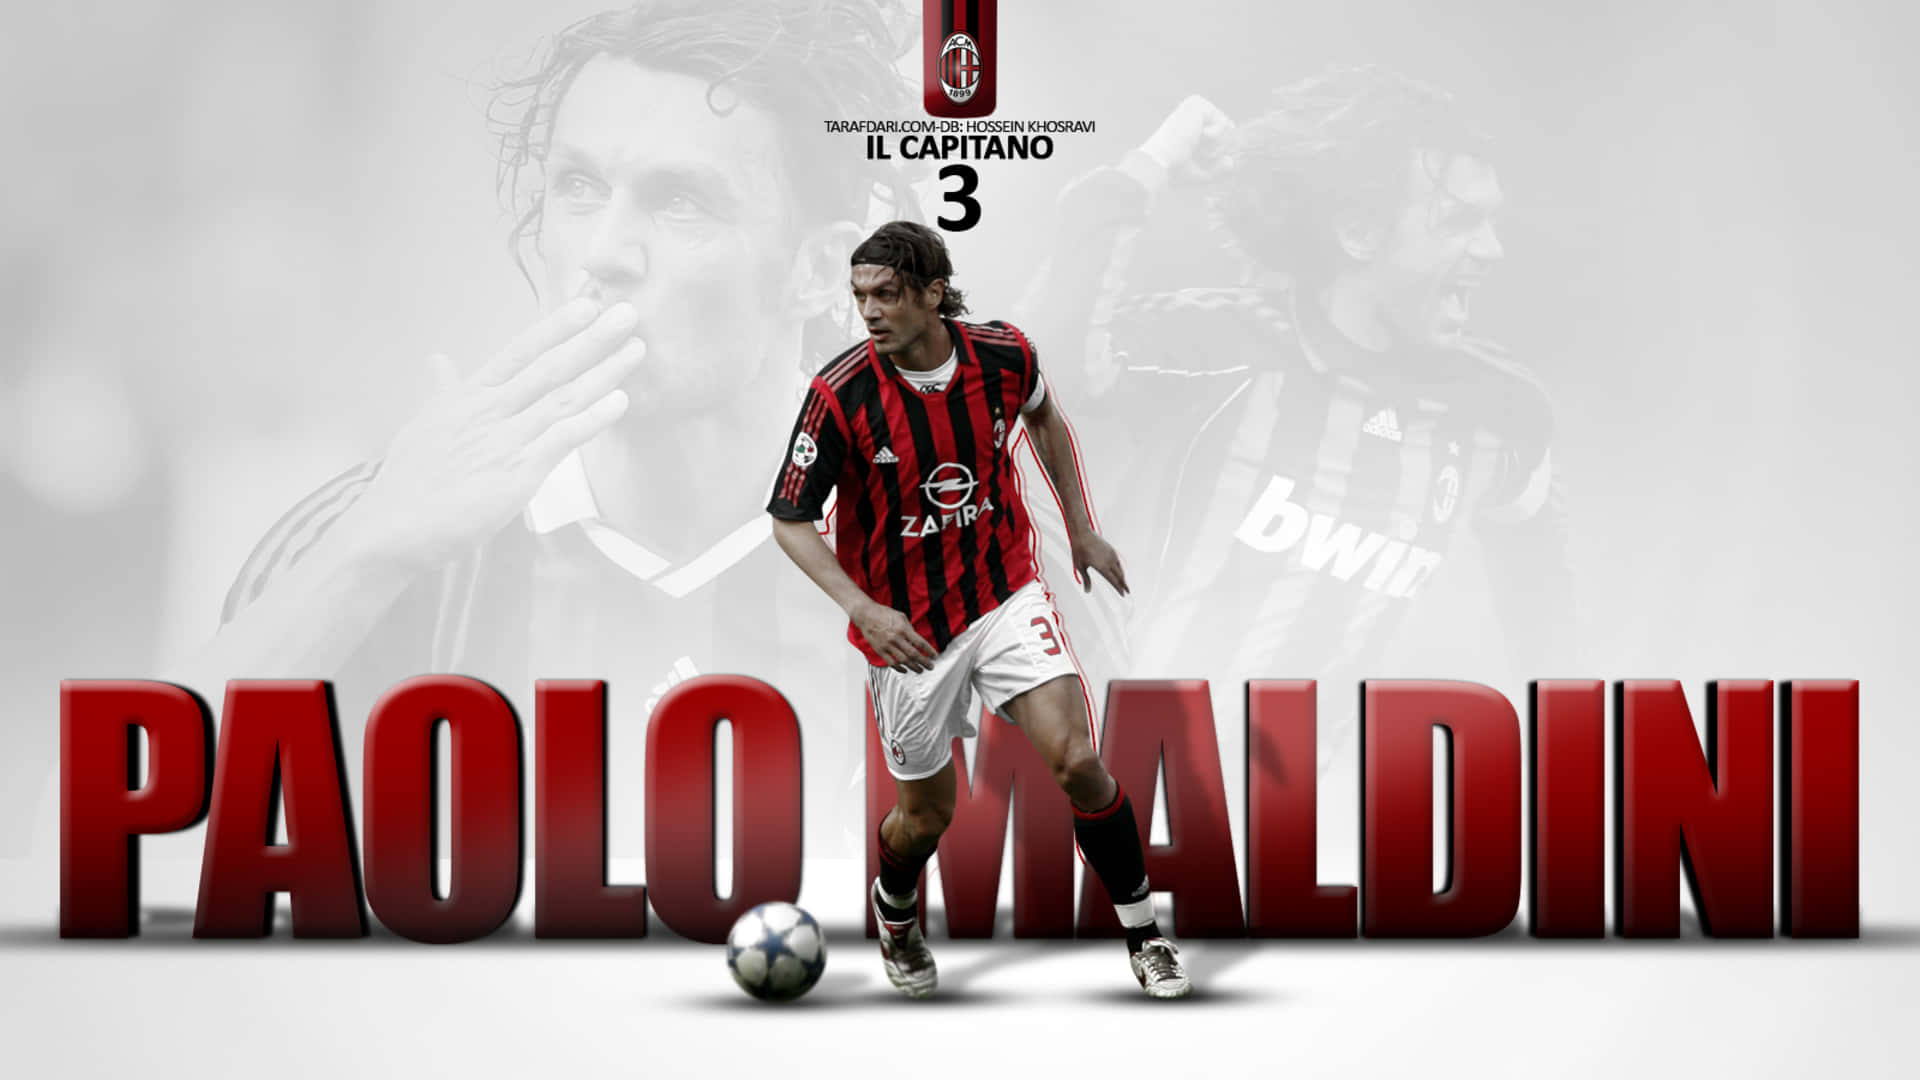 Paolo Maldini Nice Poster Background